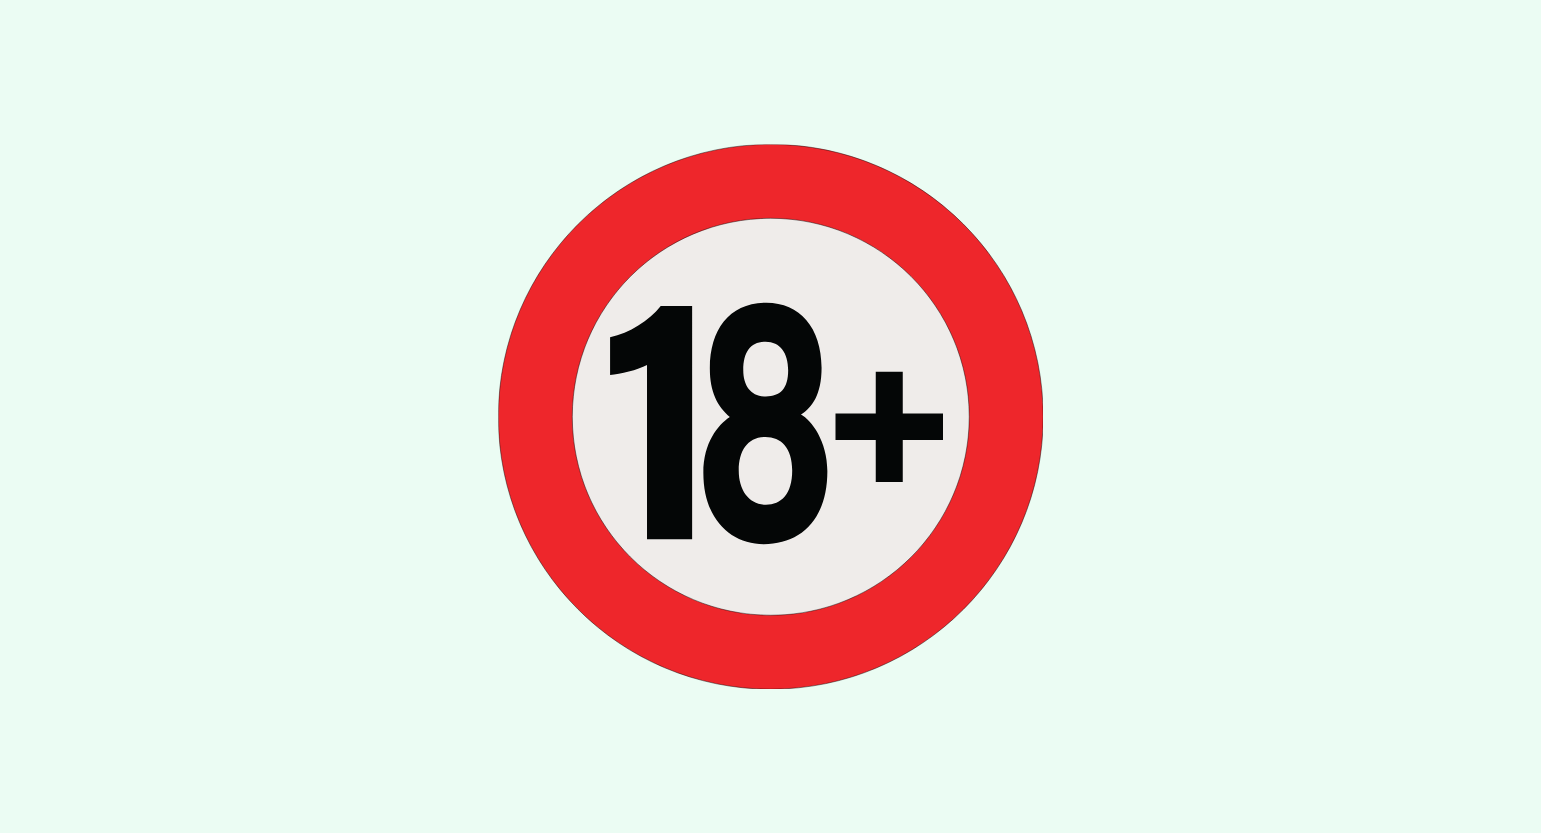 Illustration of 18+ sign